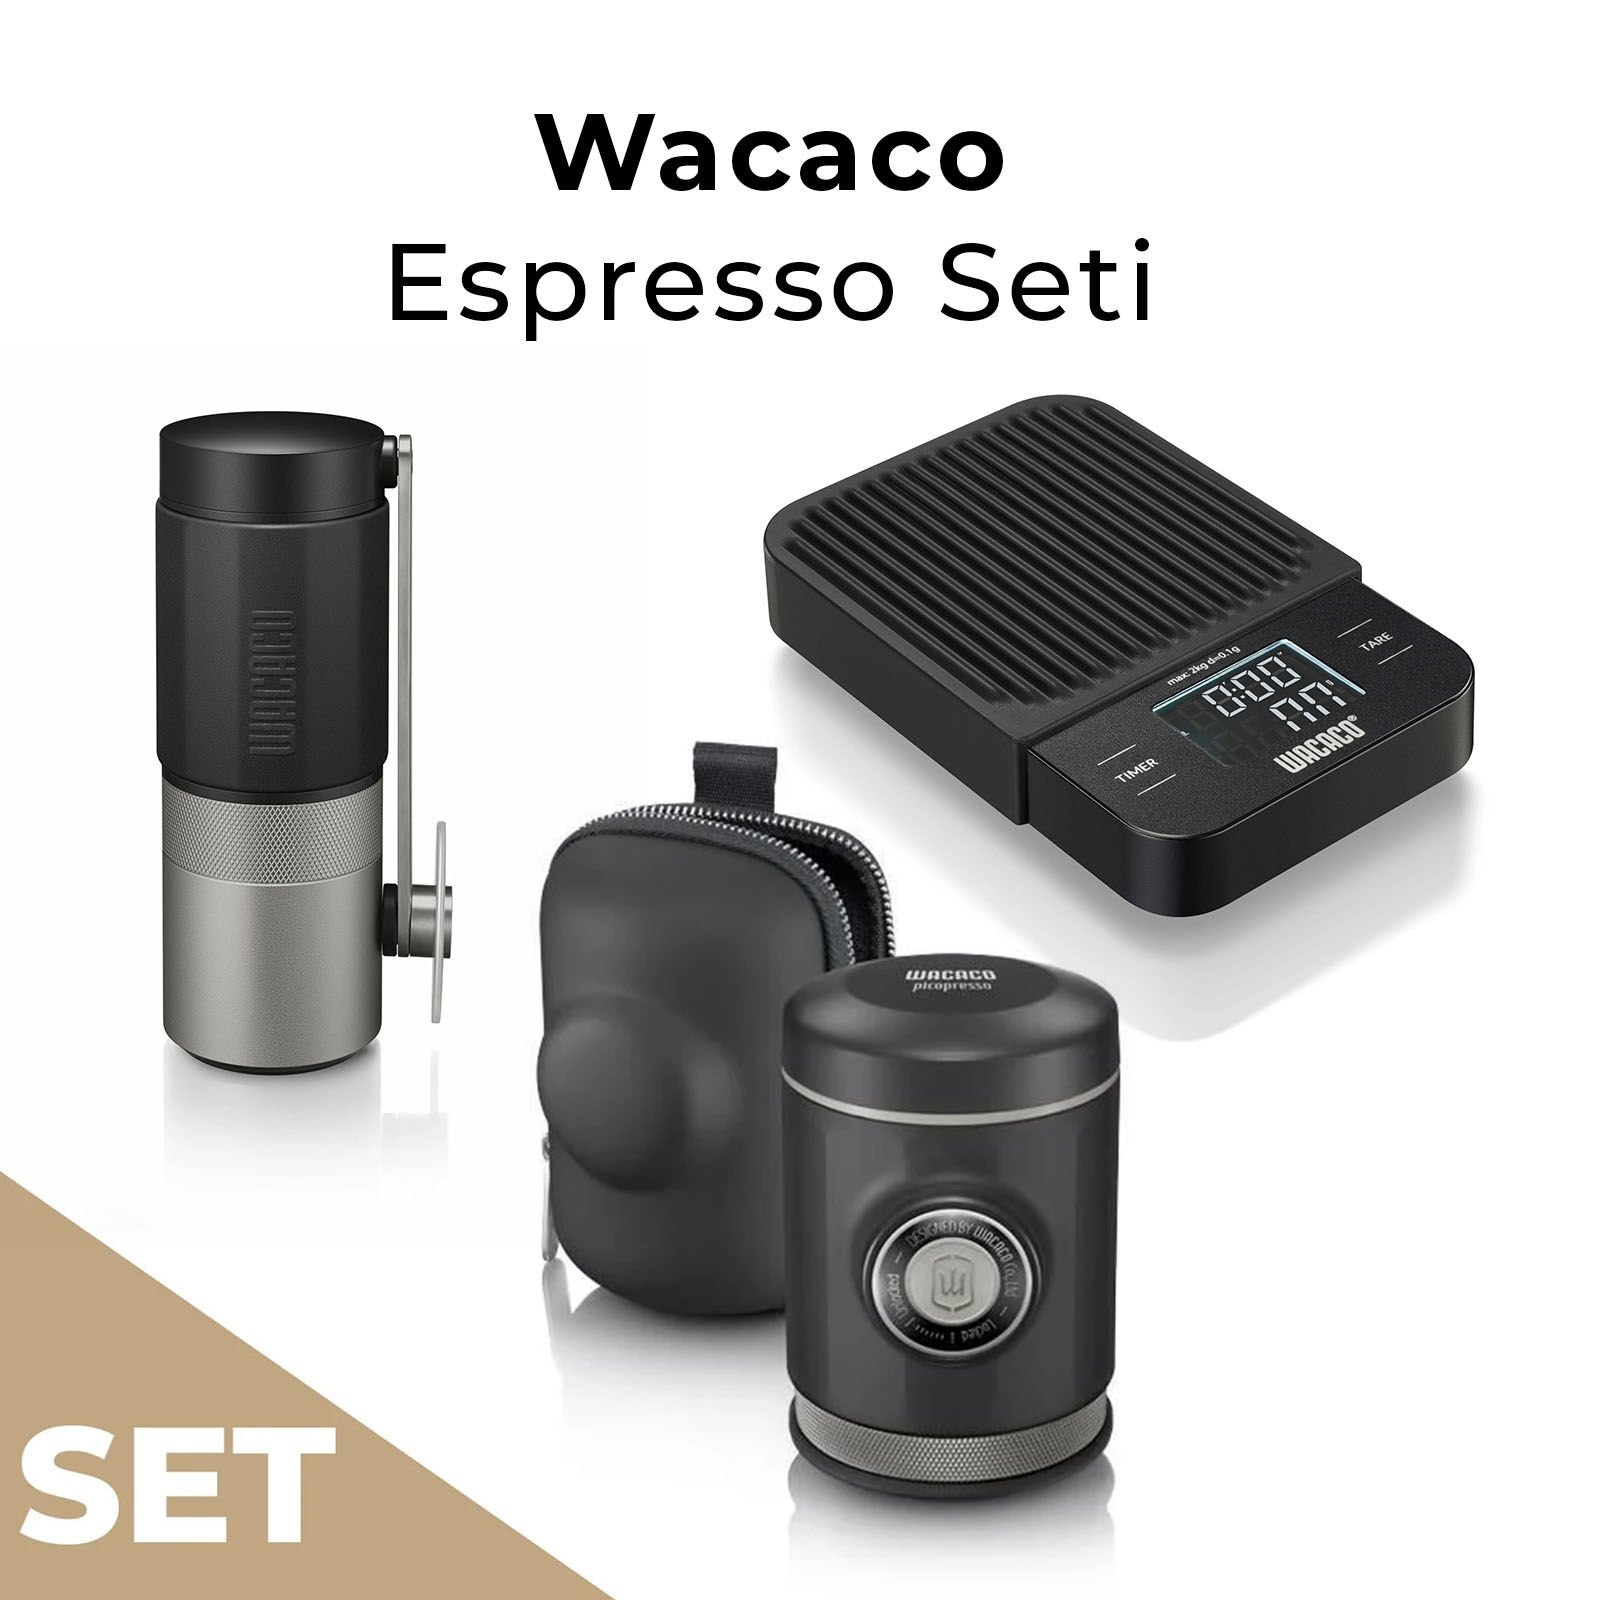 Wacaco Espresso Set - Picopresso - Exagram - Exagrind